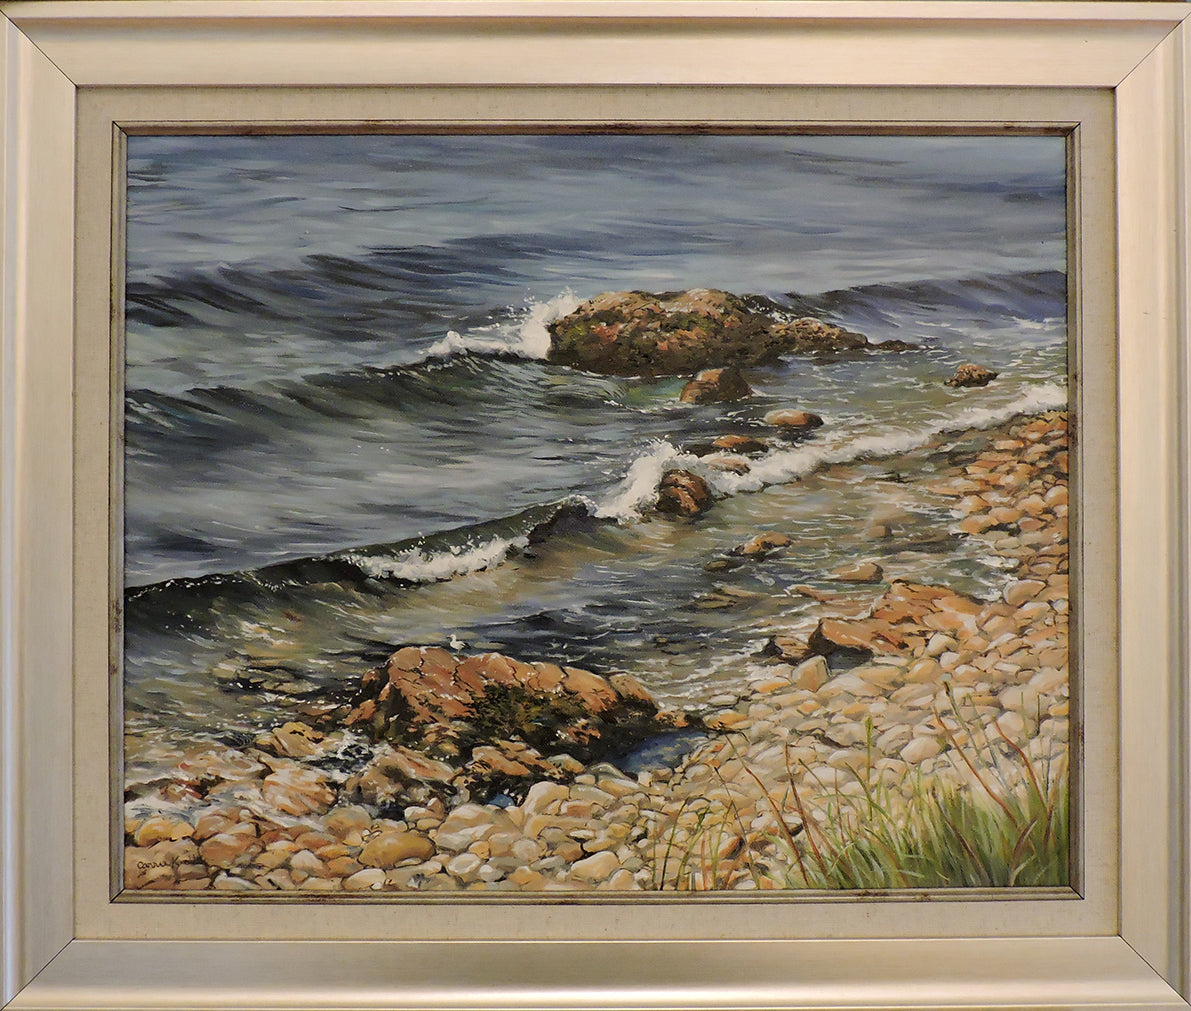 West Coast Shore - Oil on Canvas